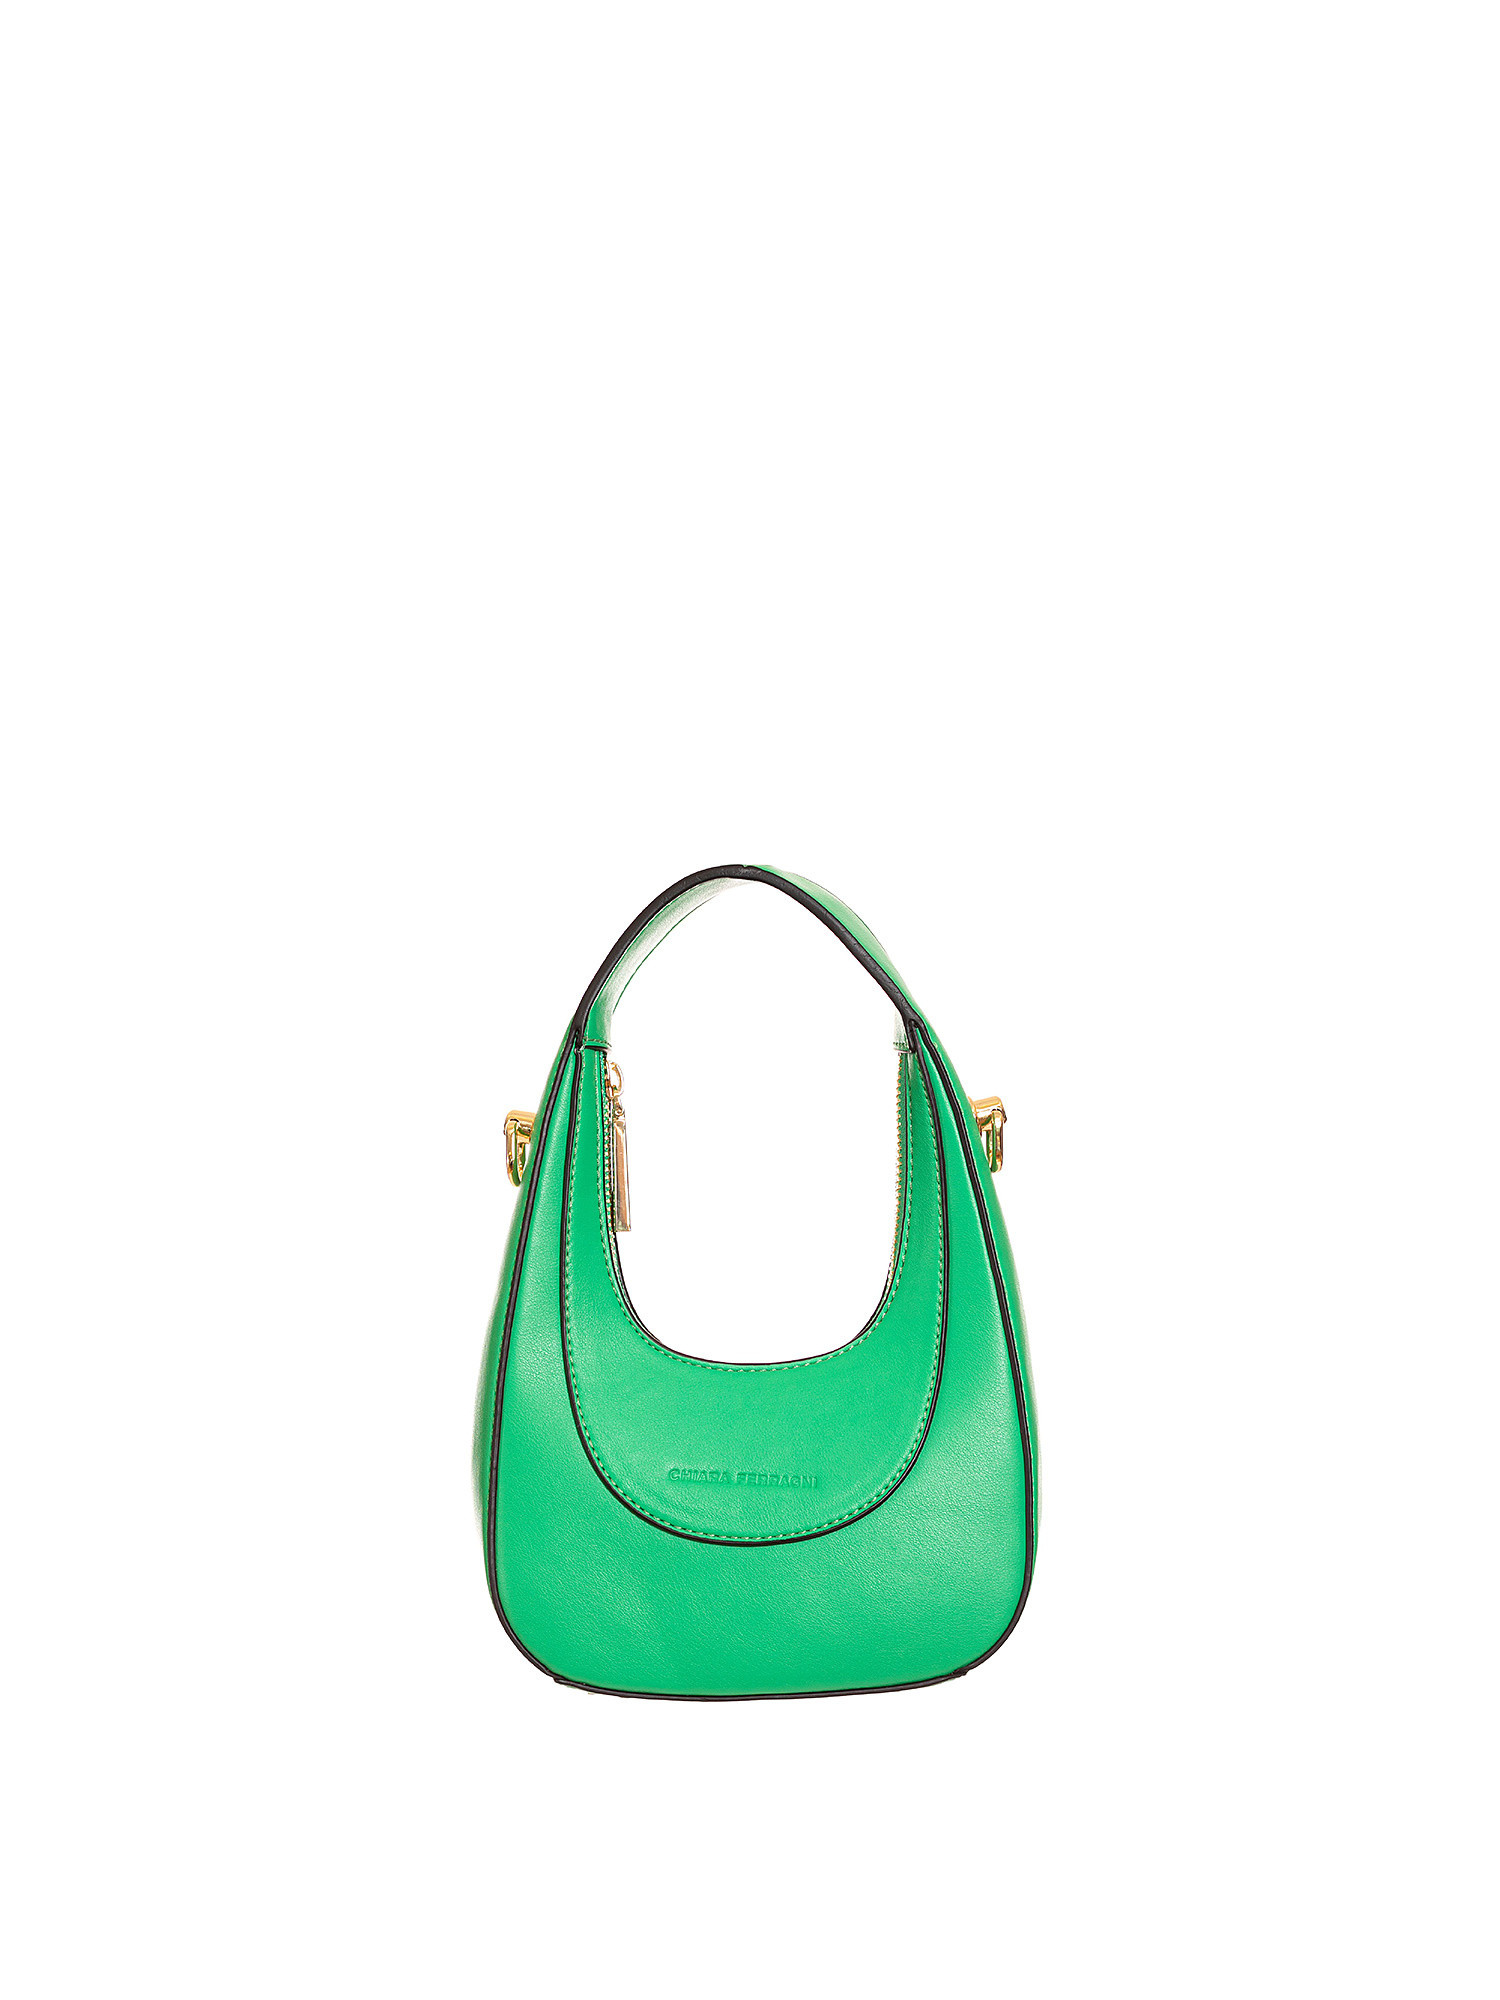 Chiara Ferragni - Range G golden eye star bag, Green, large image number 1